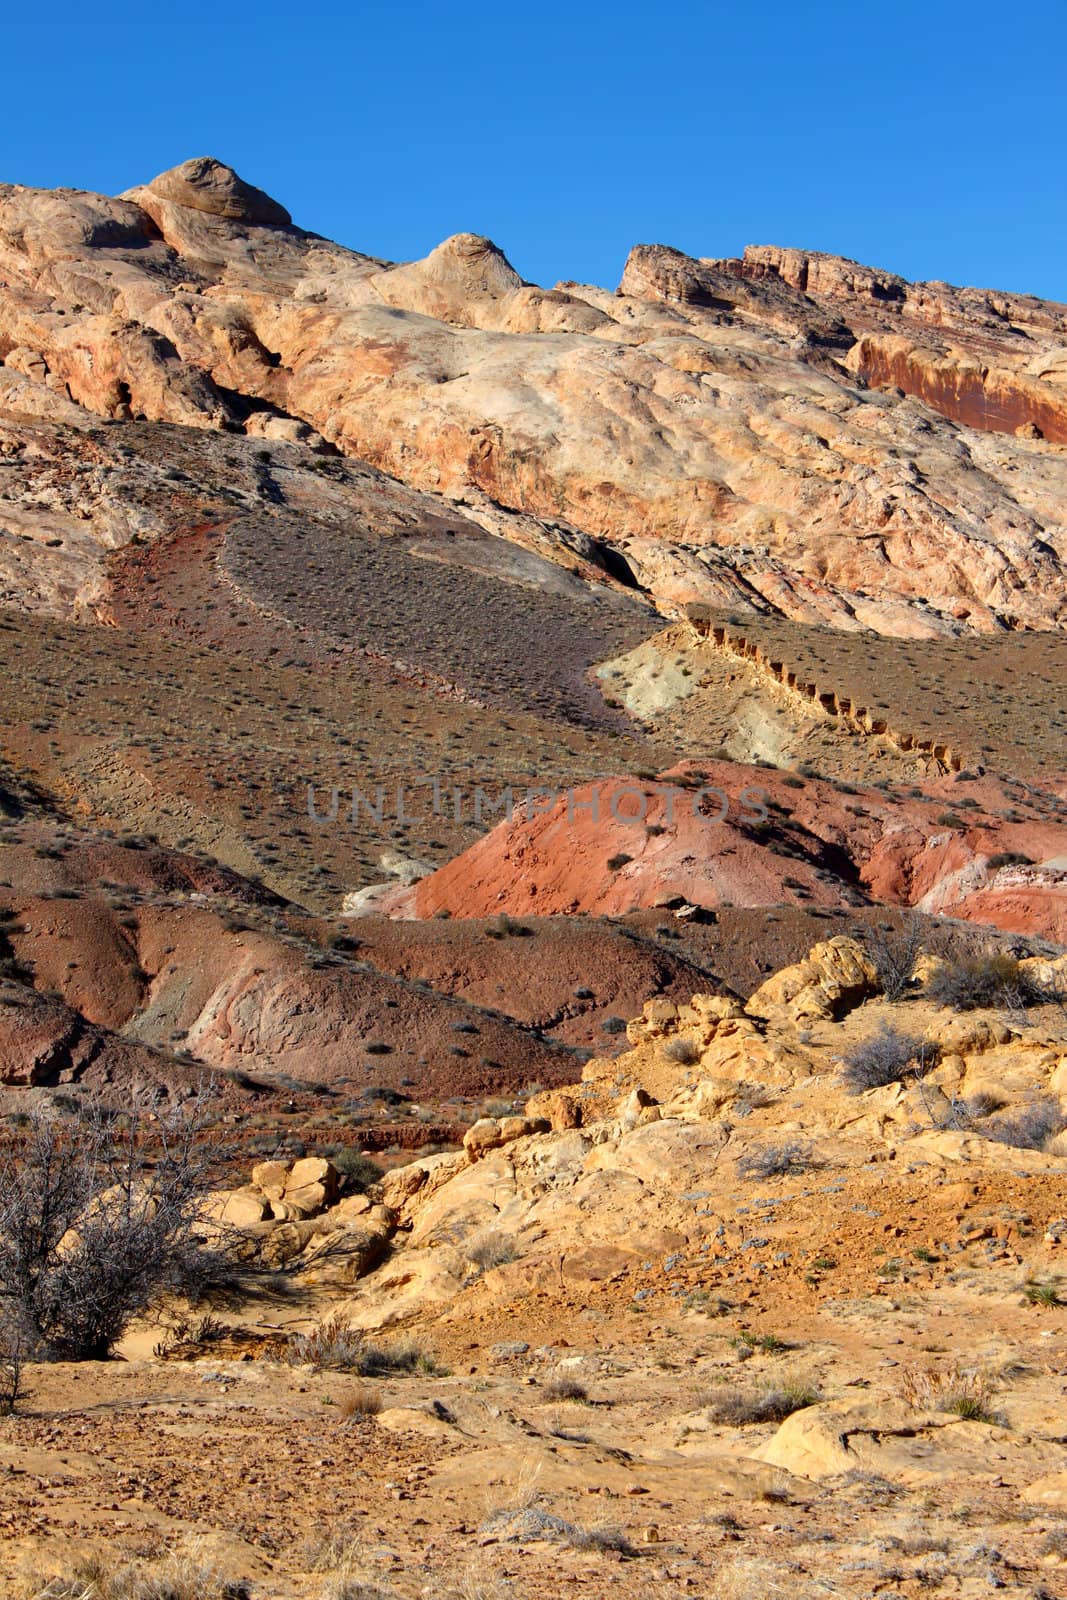 Beautifully colored rocky landscape of the San Rafael Reef of Utah.